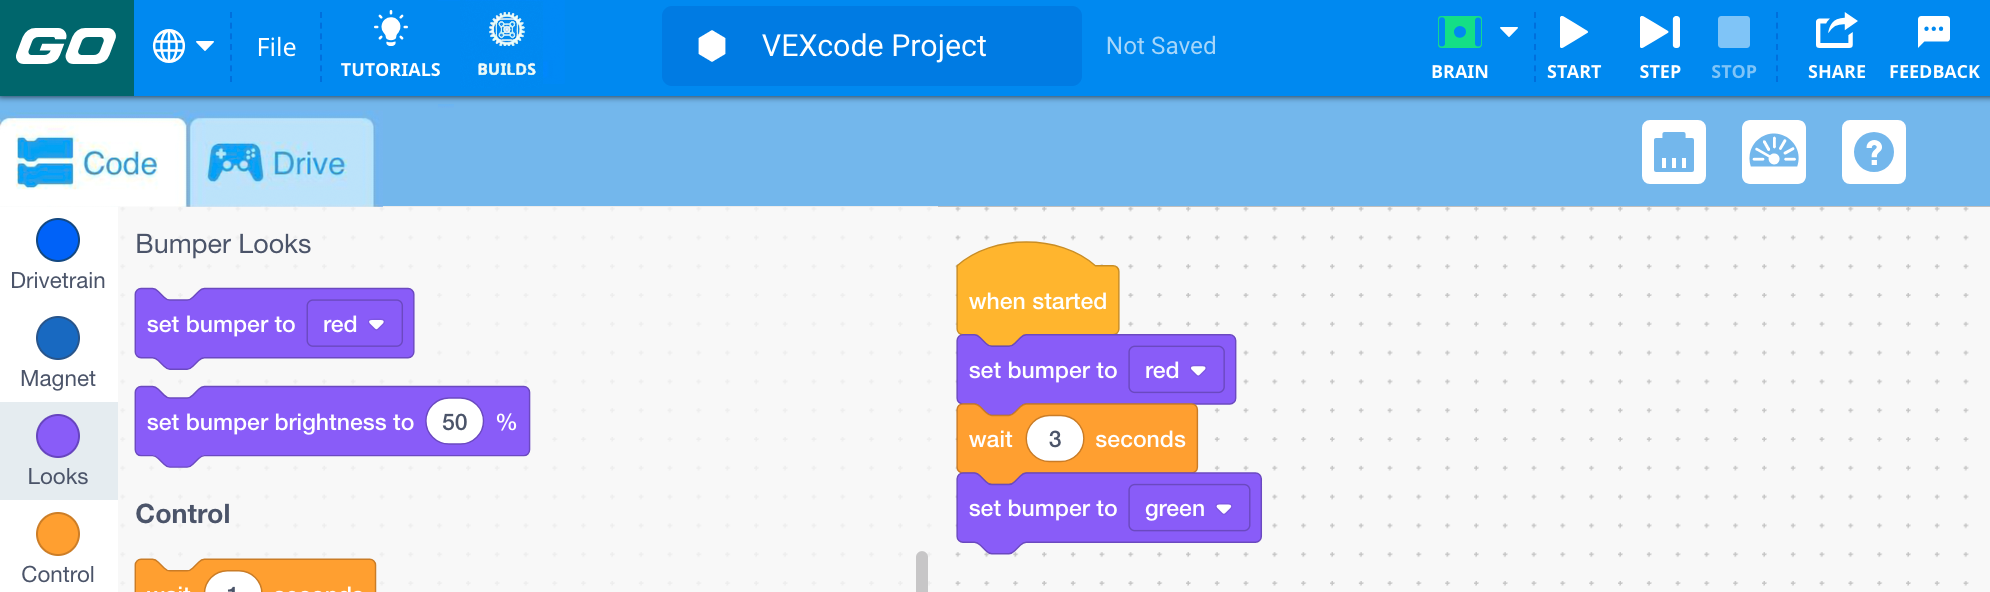 VEXcode_GO_Bumper.png